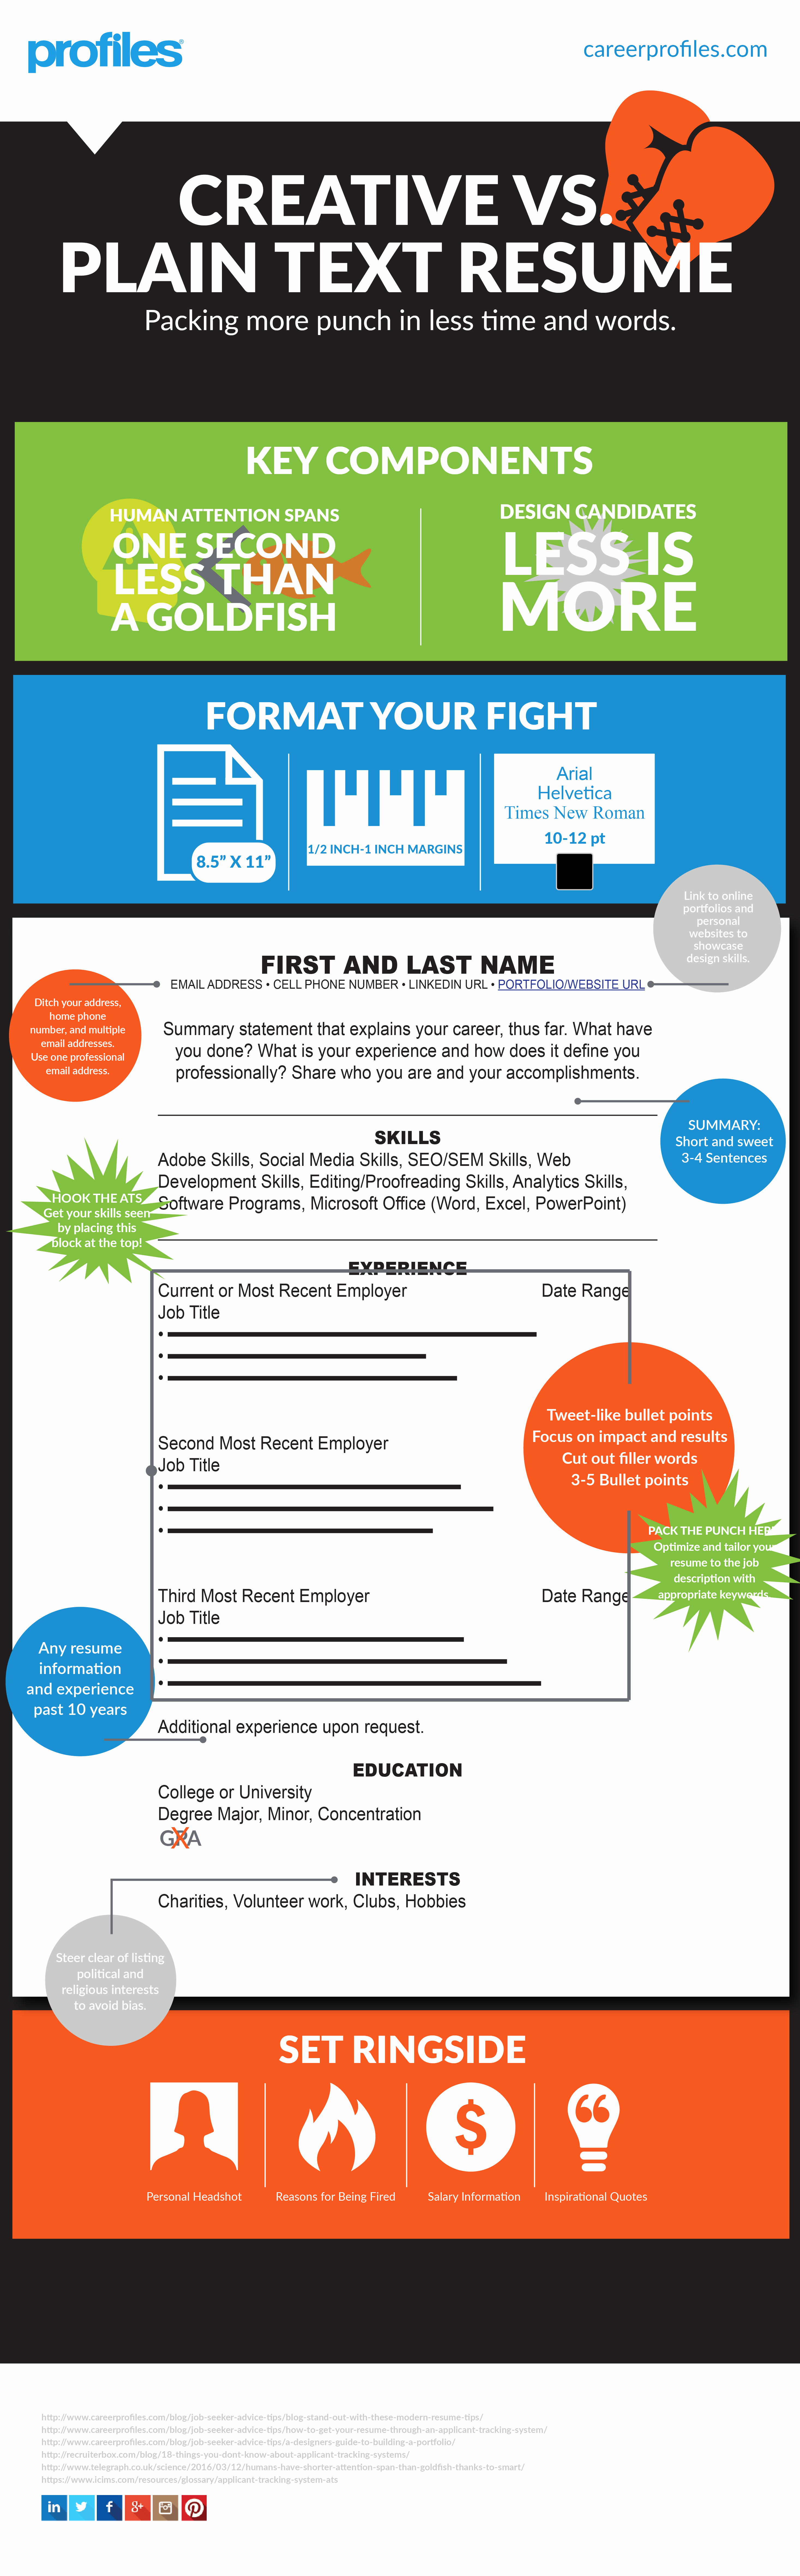 [infographic] Plain Text Resume Template Career Profiles